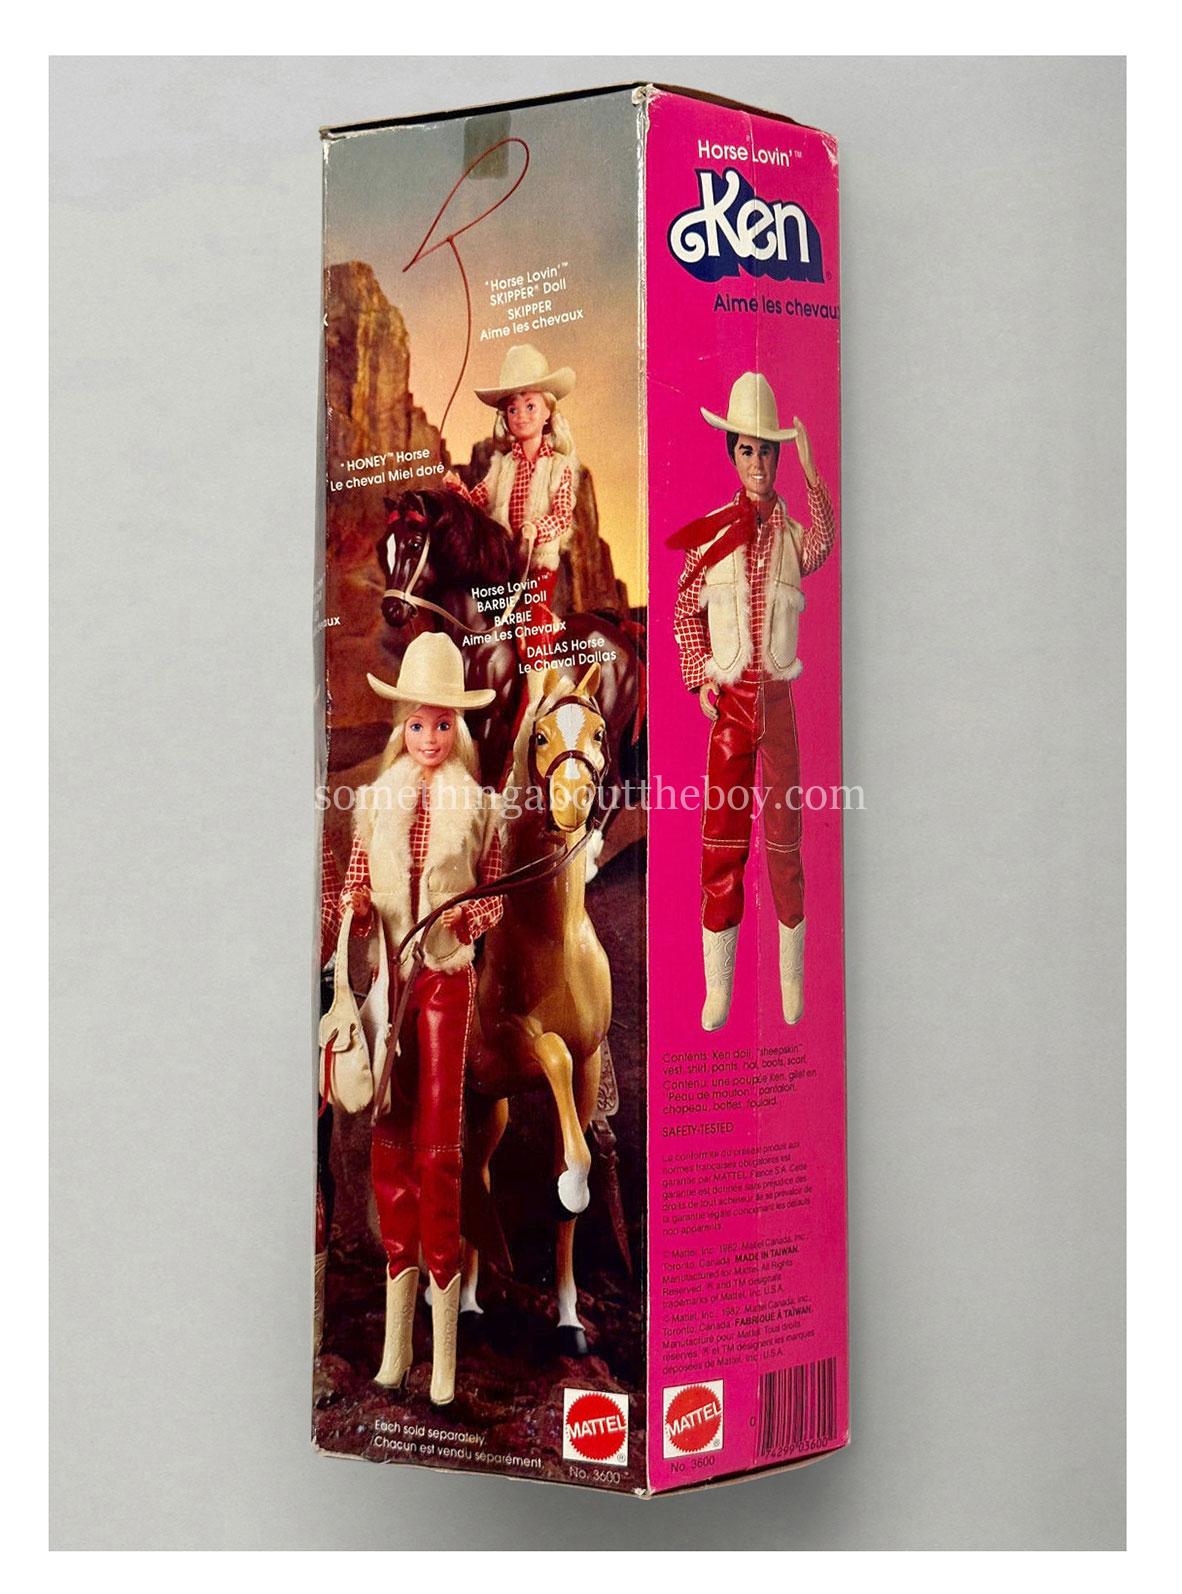 1983 #3600 Horse Lovin' Ken Canadian packaging